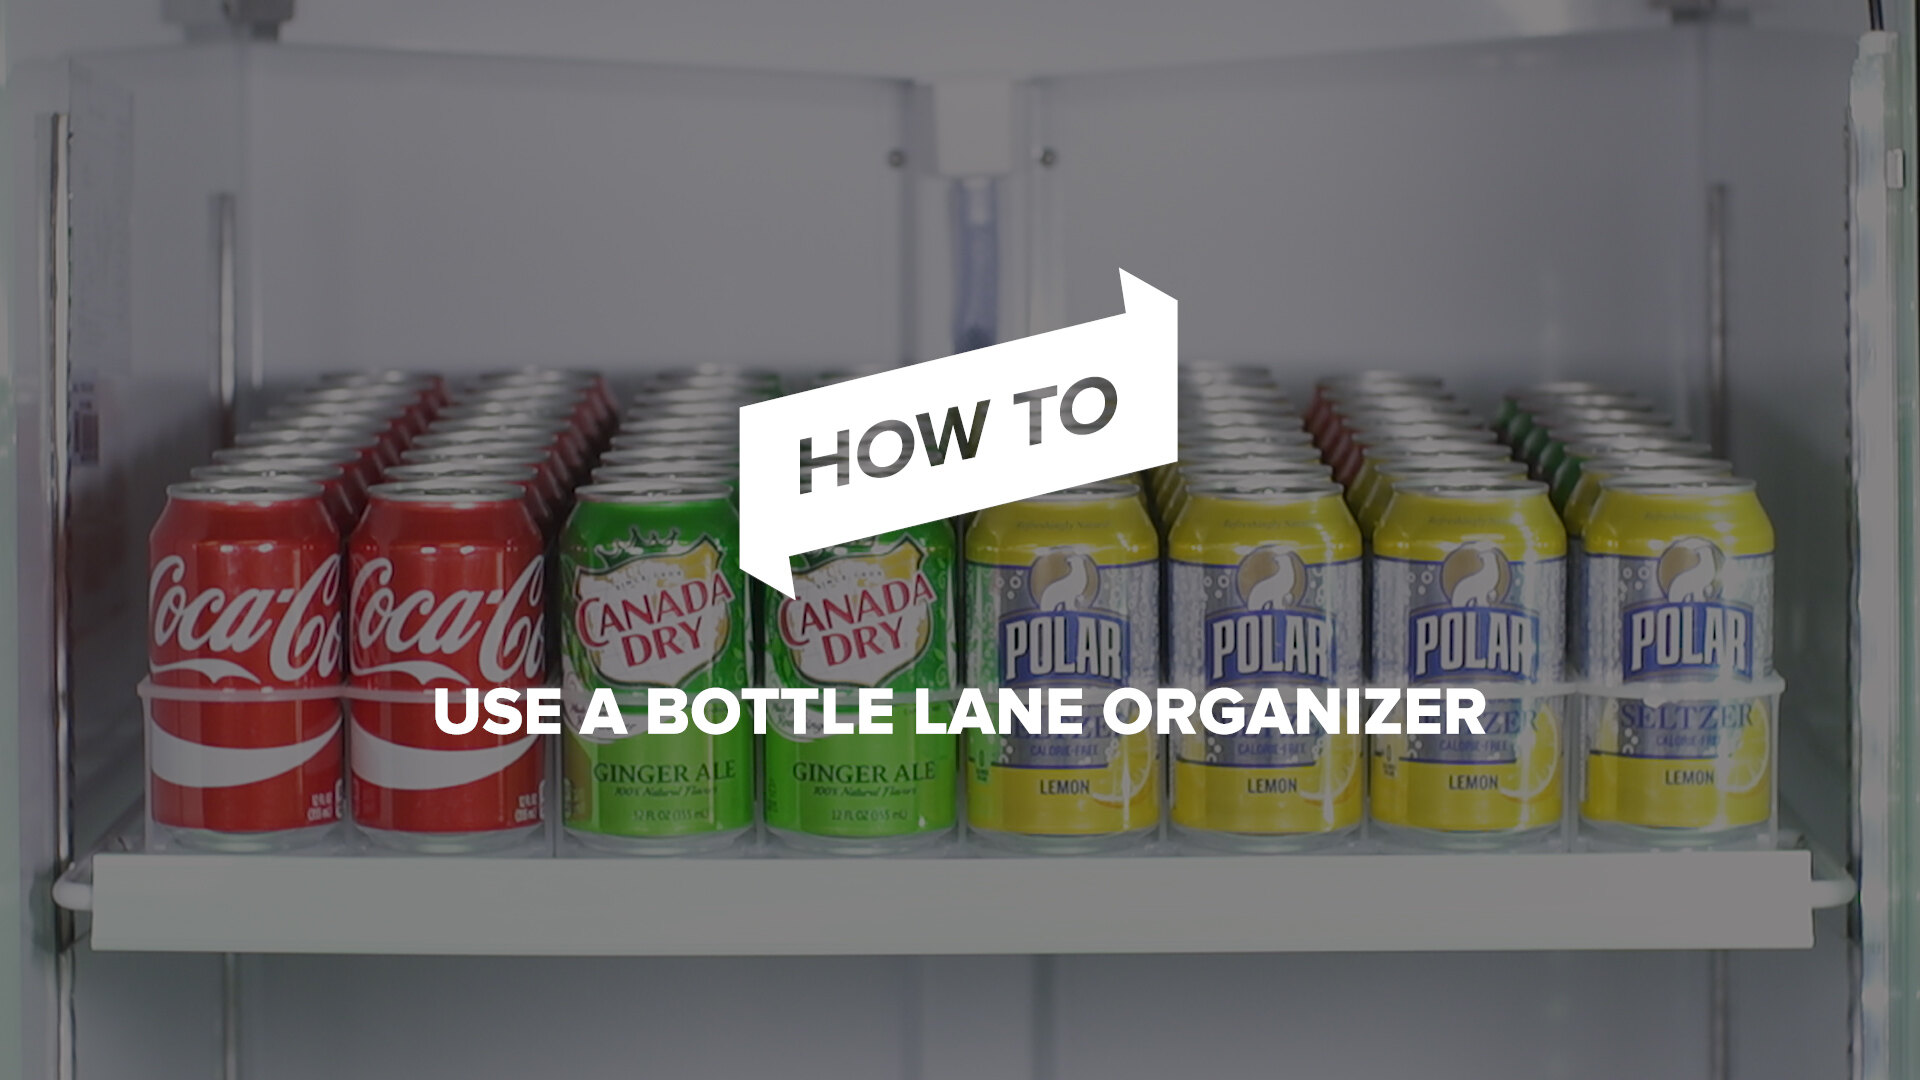 https://cdn.webstaurantstore.com/images/videos/extra_large/how_to_use_a_bottle_lane_organizer.jpg